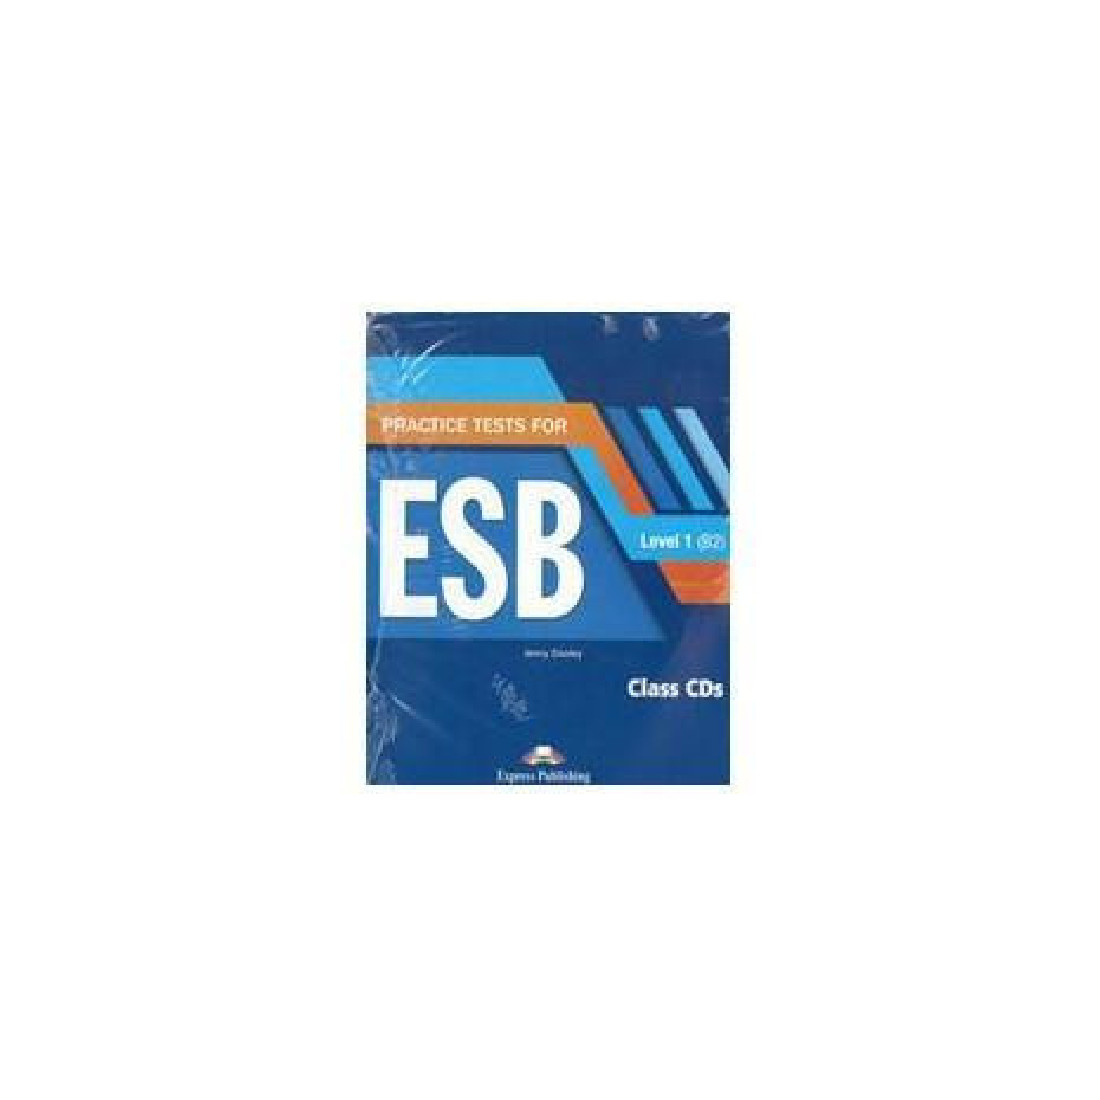 YORK PRACTICE TEST FOR ESB B2 CD CLASS